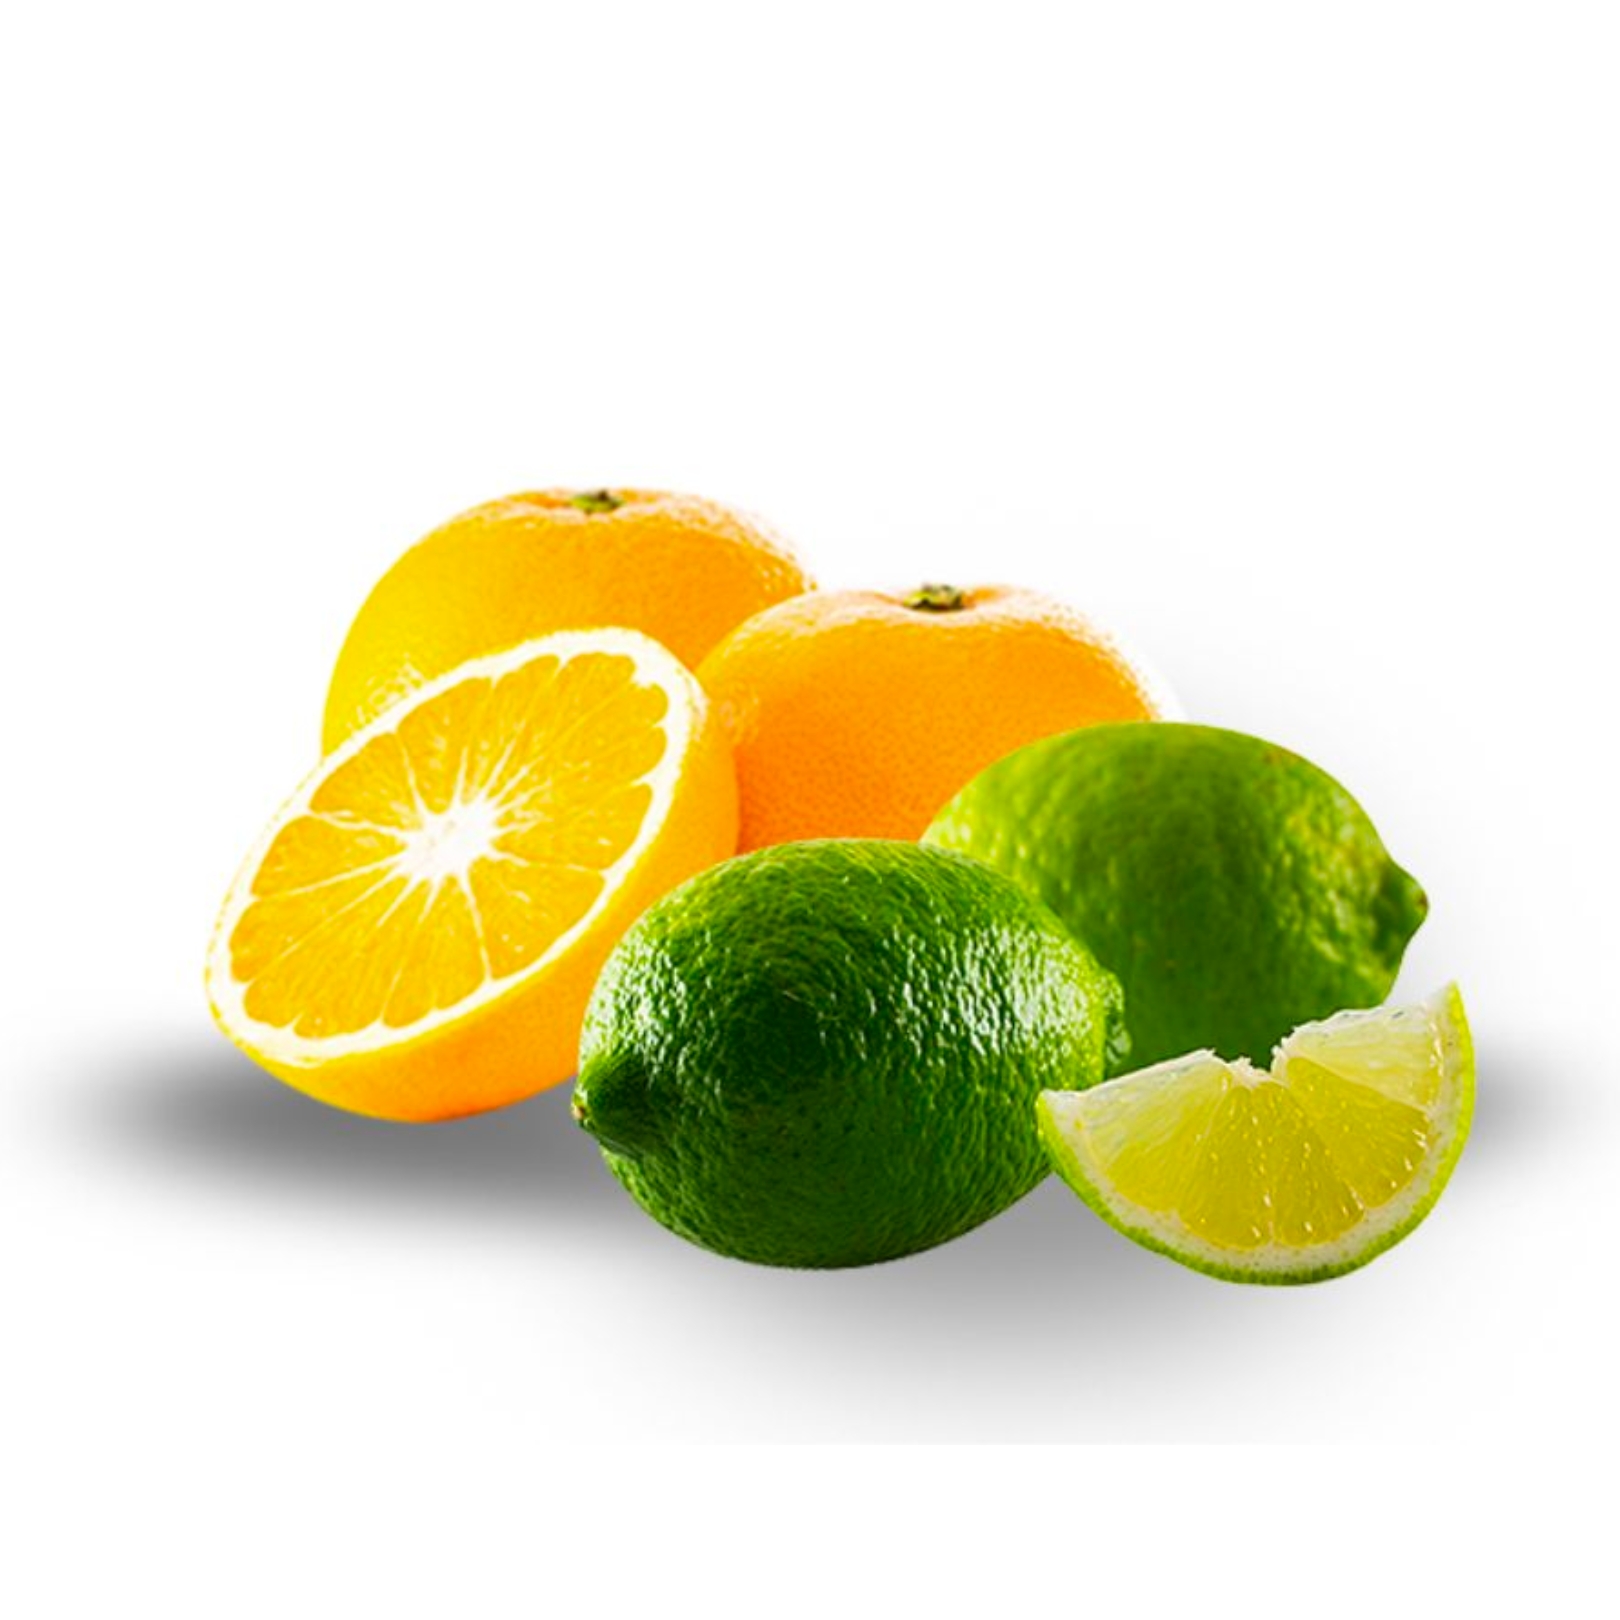 Buy Grapefruit Lime Online NZ